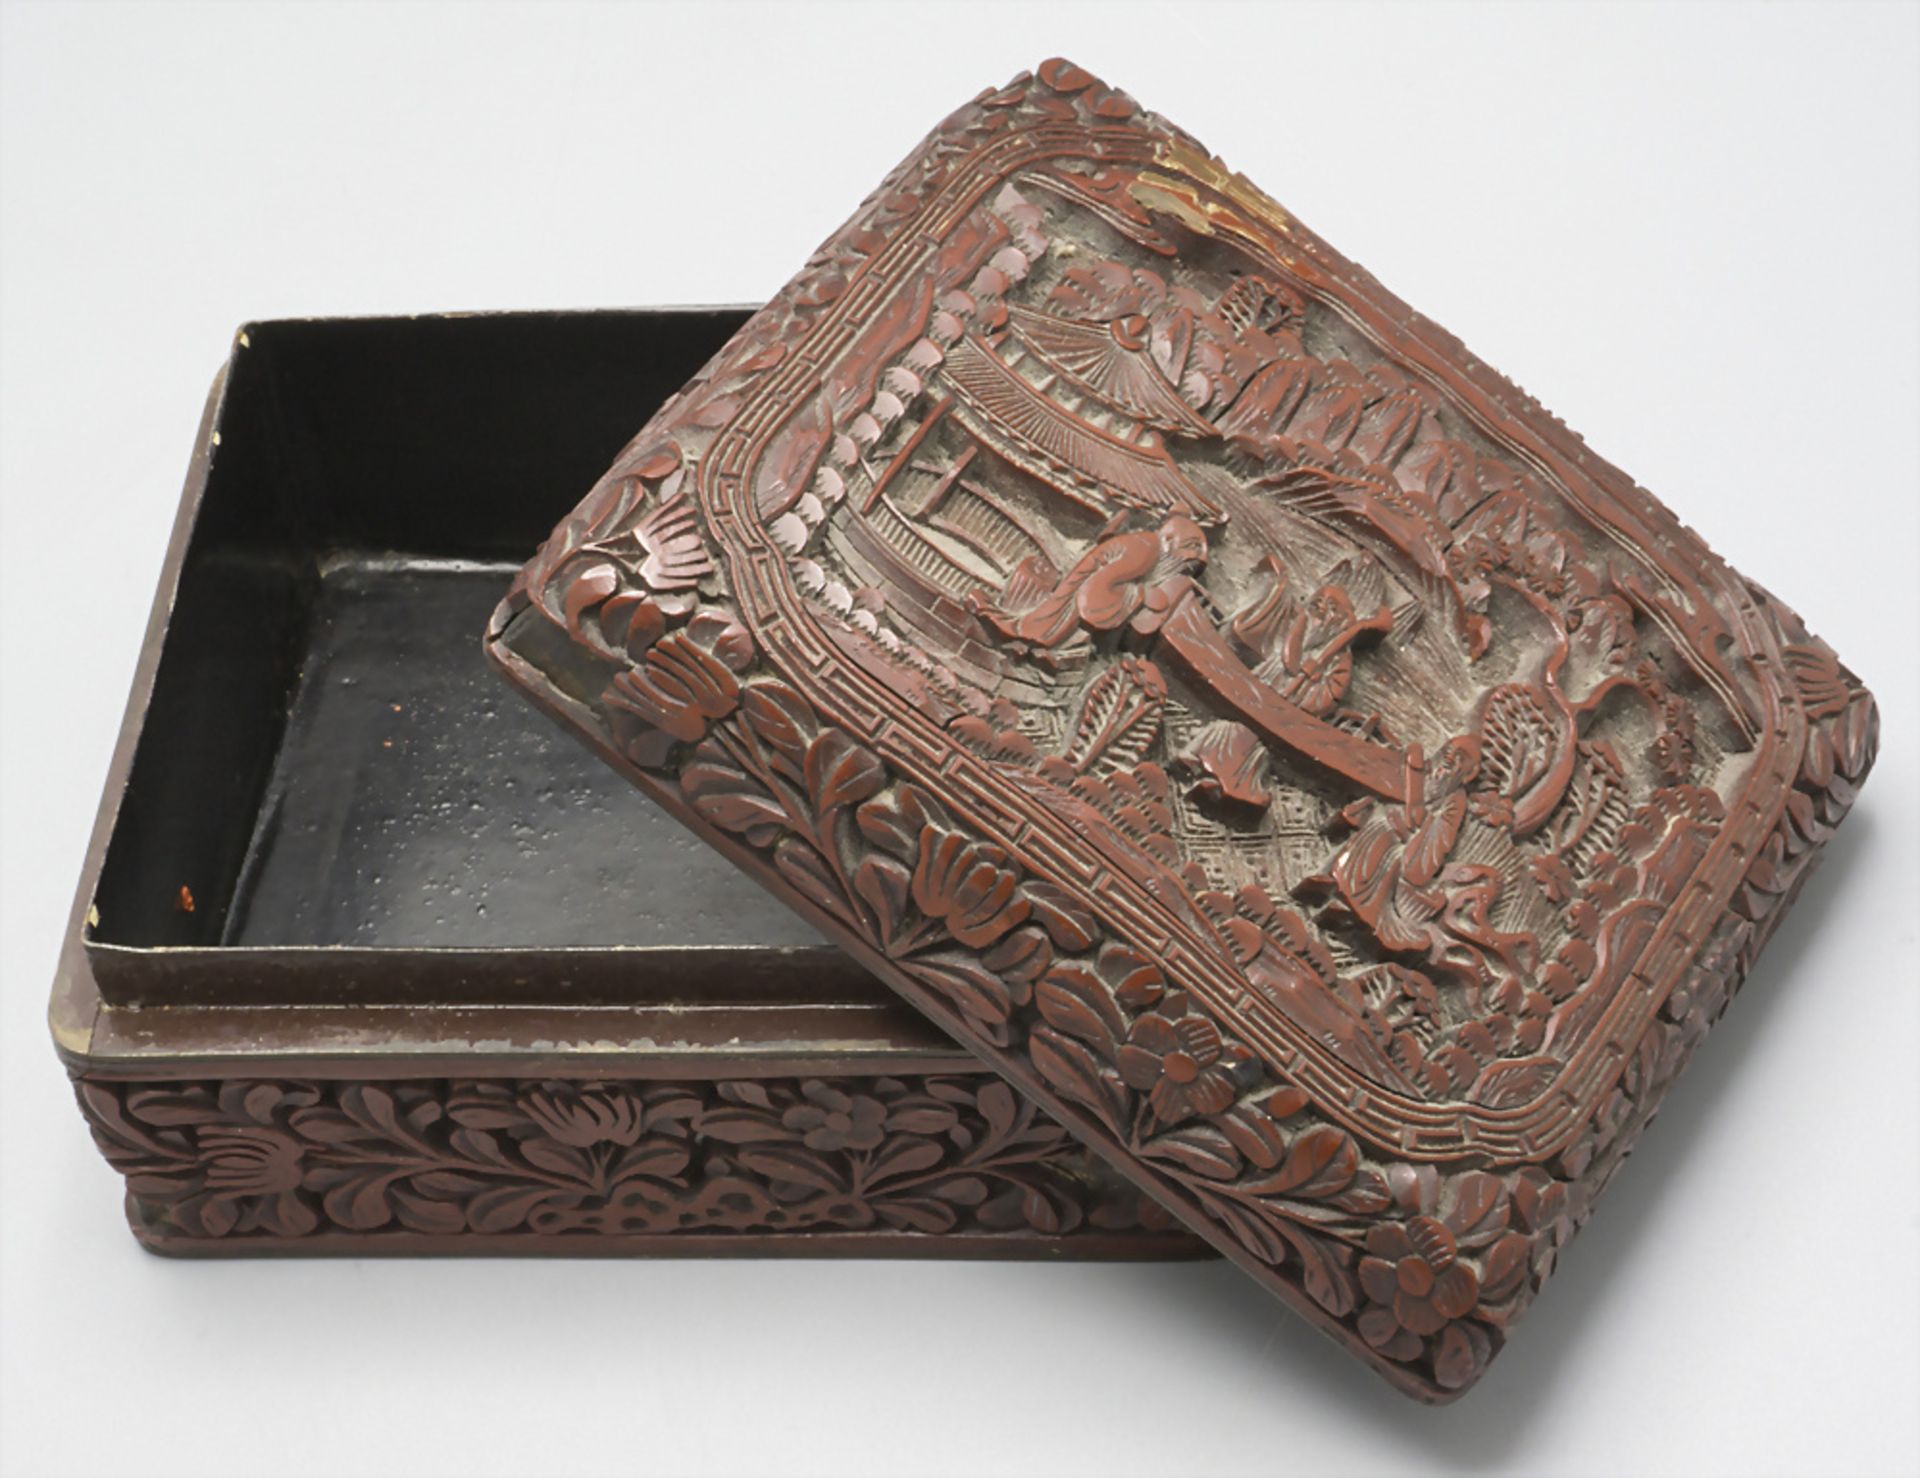 Lack Deckeldose / A lacquered box, China, Qing Dynastie (1644-1911), gemarkt Qianlong (1736-1795)